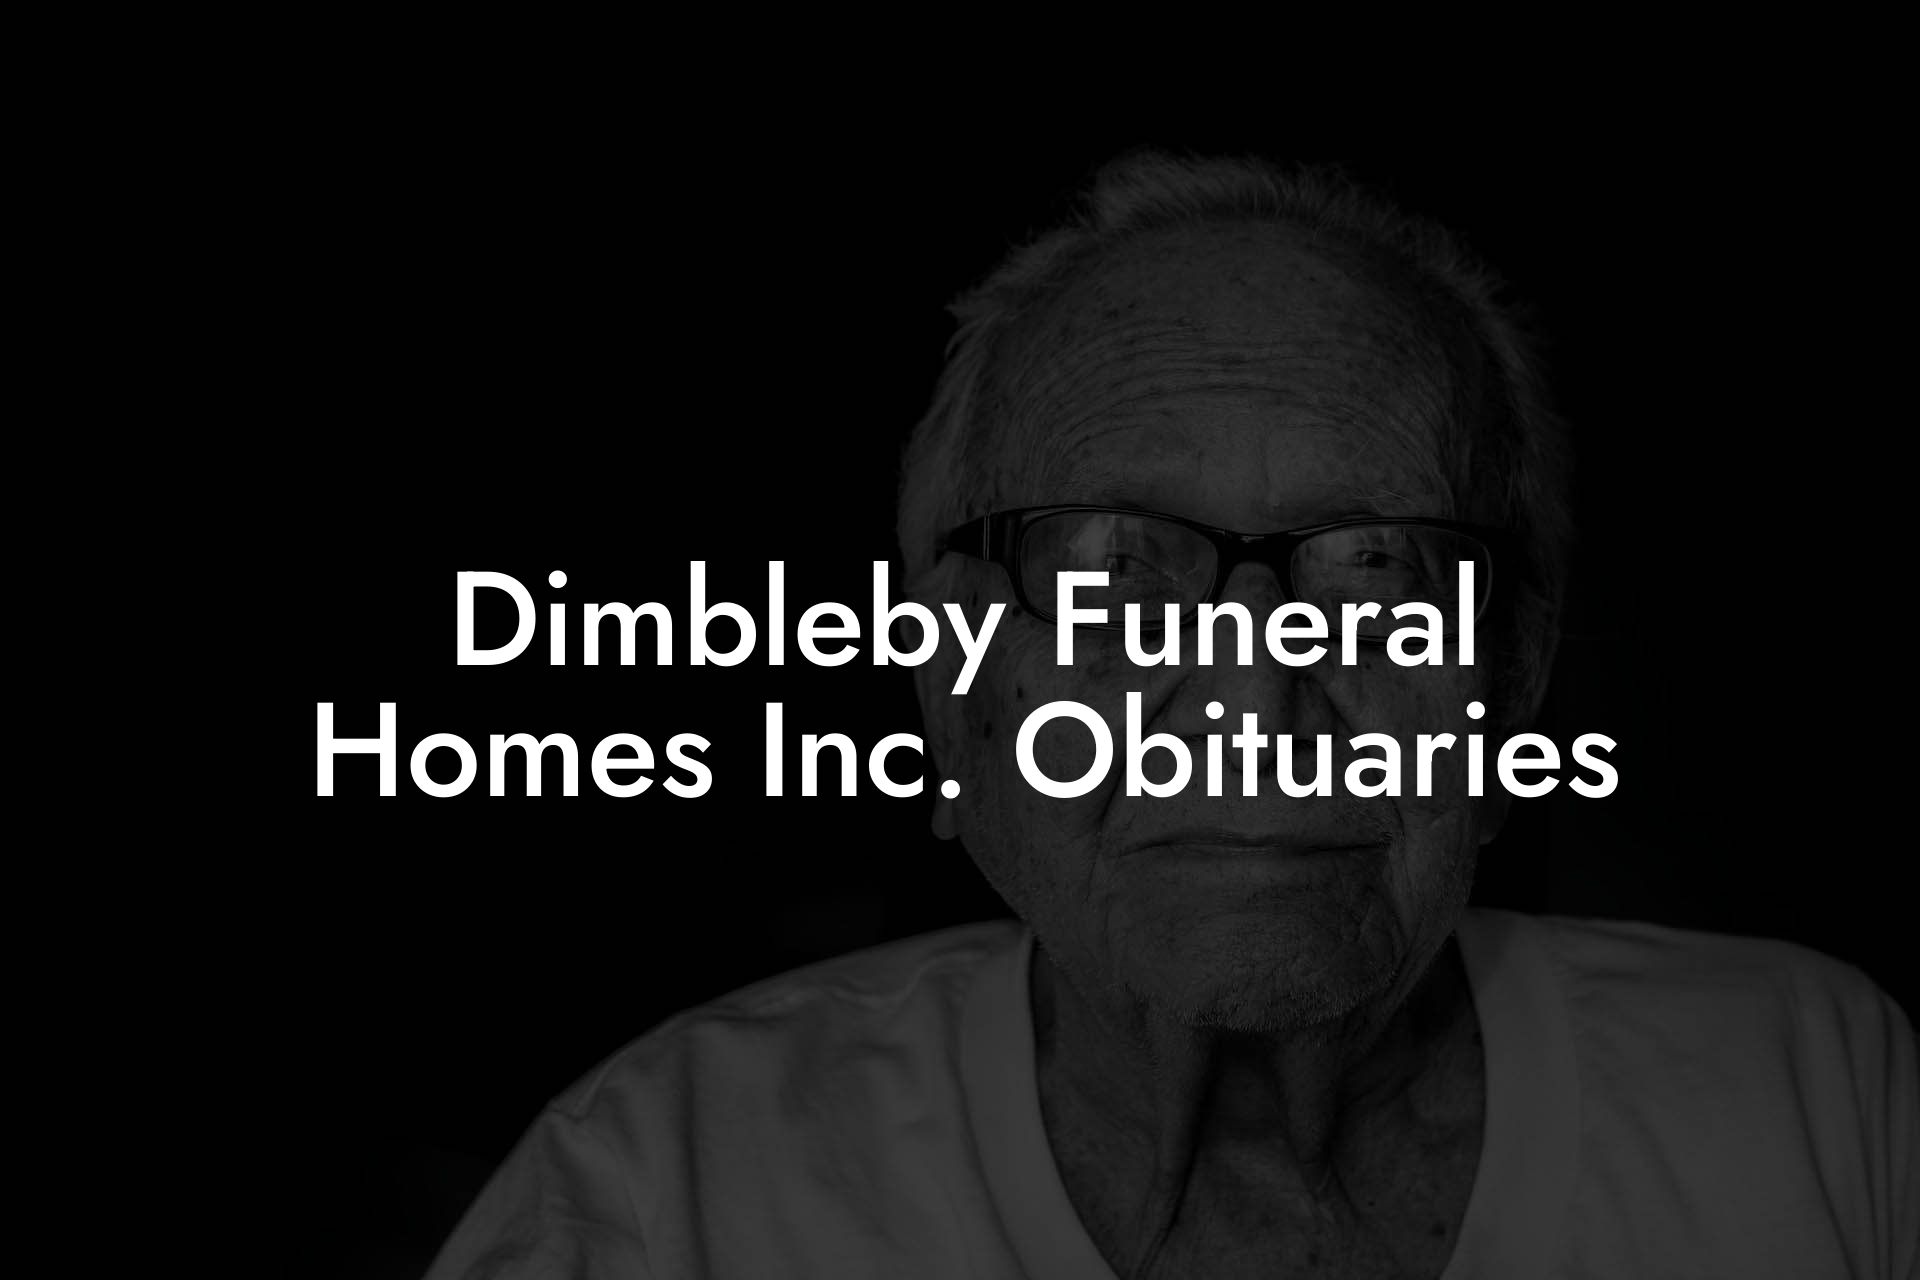 Dimbleby Funeral Homes Inc. Obituaries